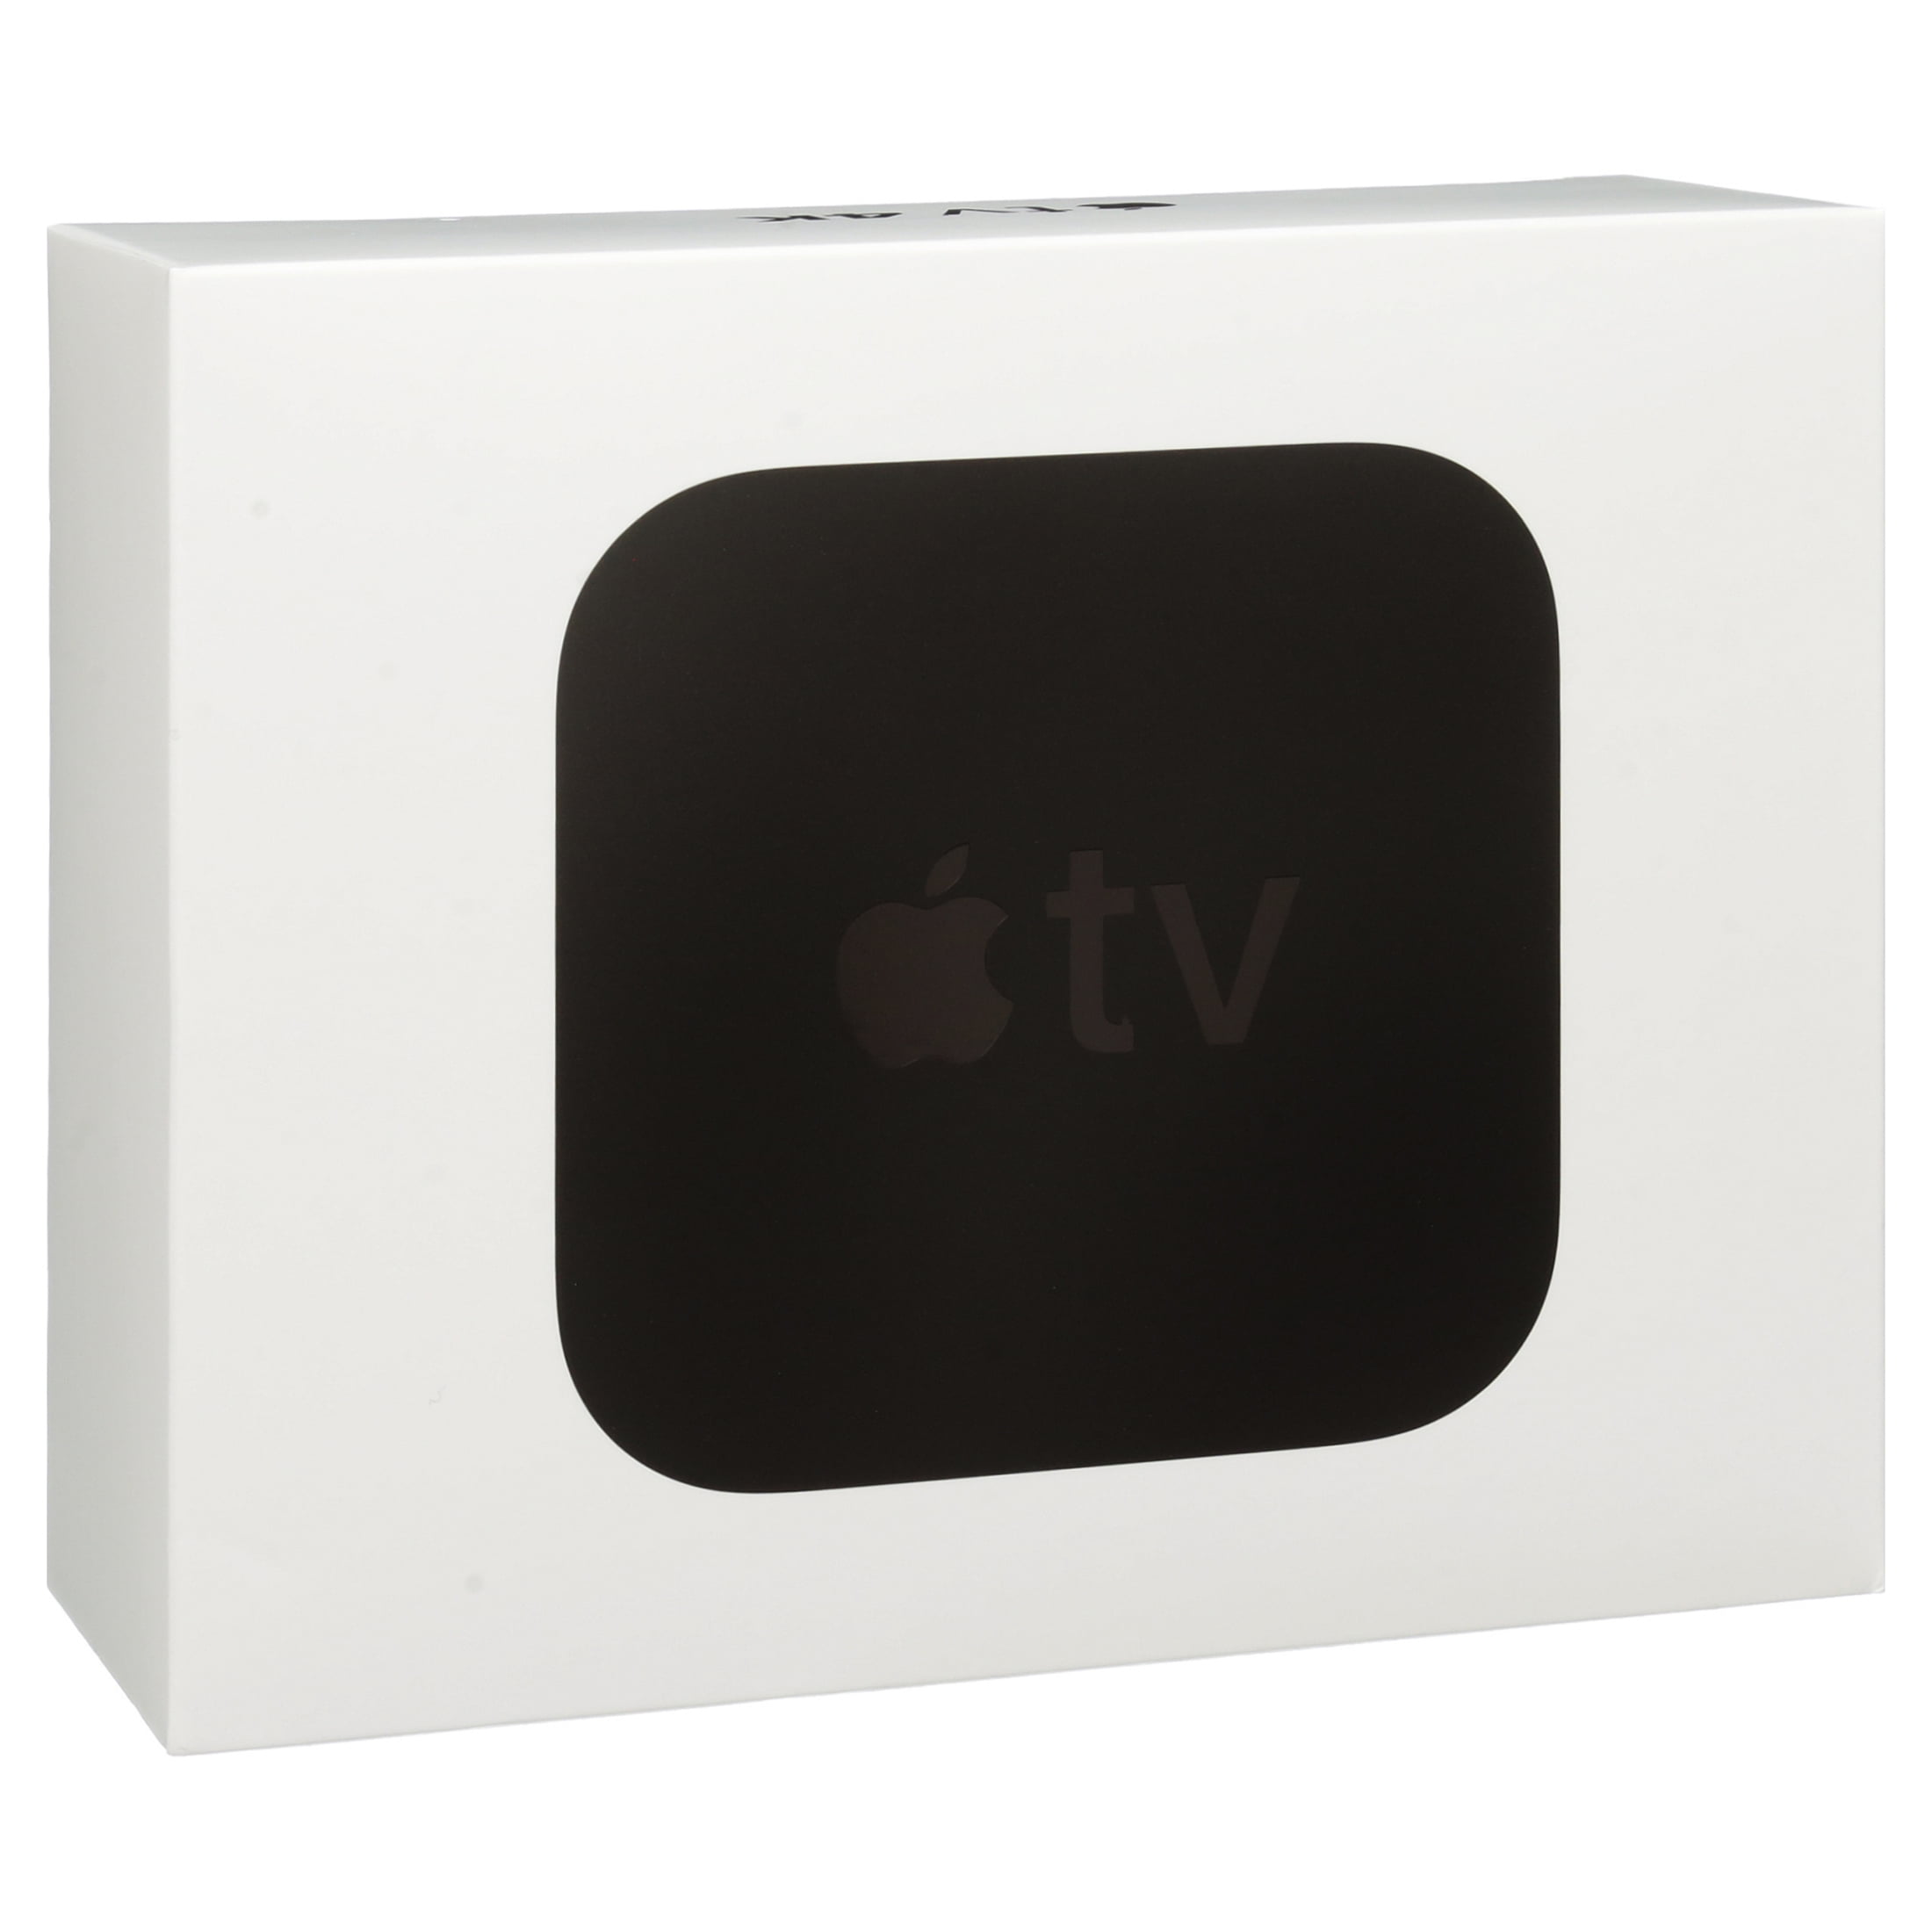 Apple TV 4K (4th Generation), 32 GB